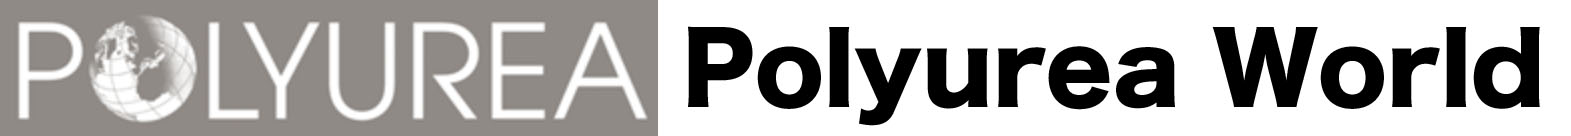 logo_Polyurea_World.jpg